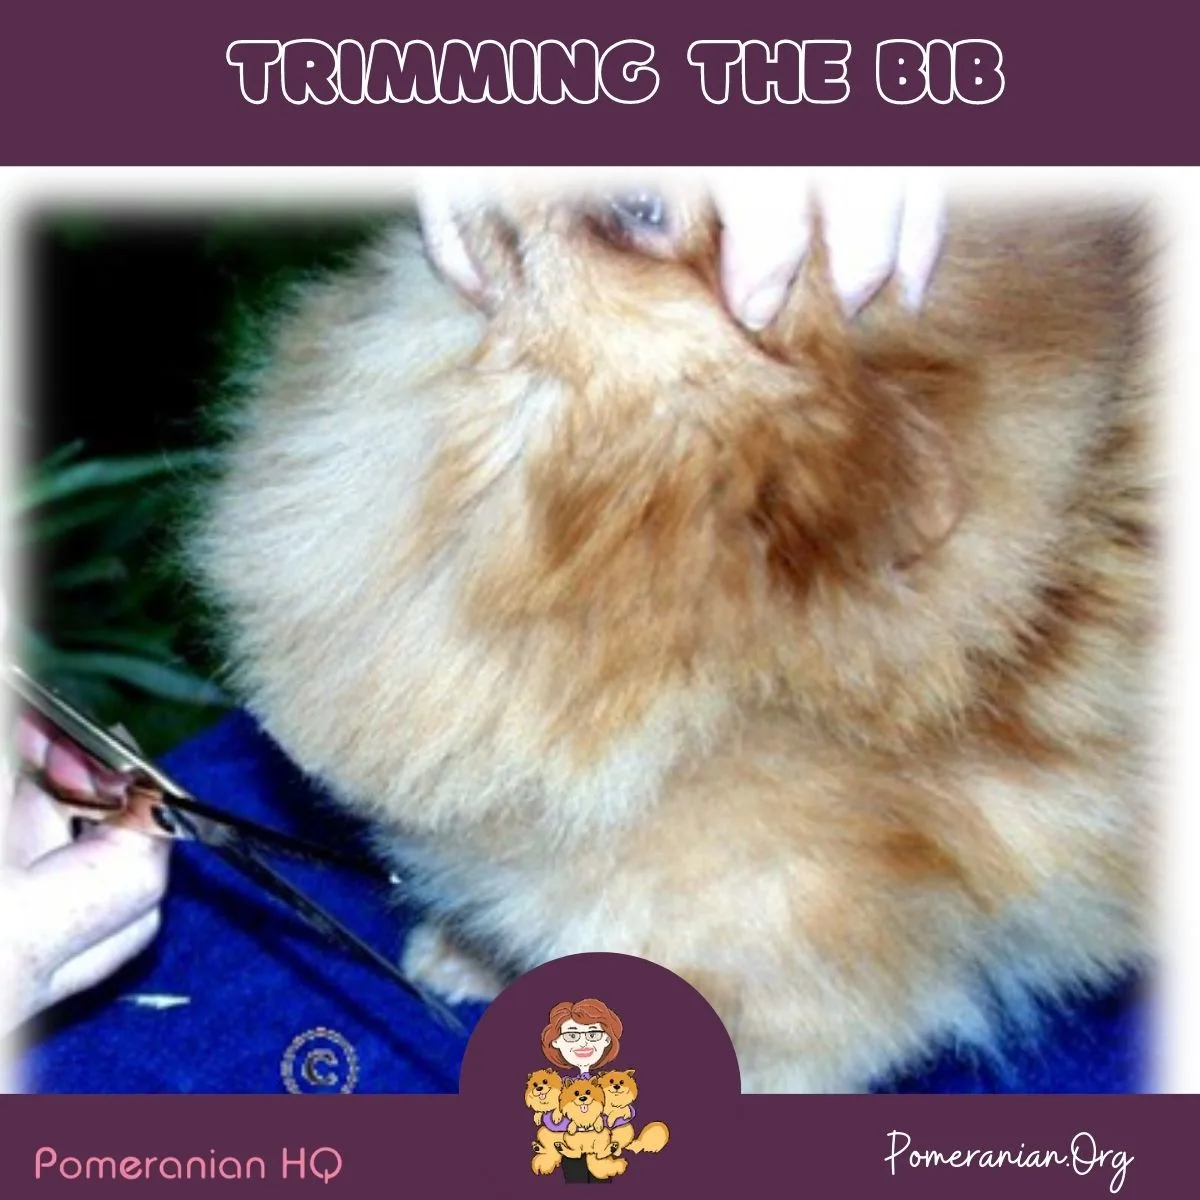 How to Trim a Pomeranian- trimming the Bib.